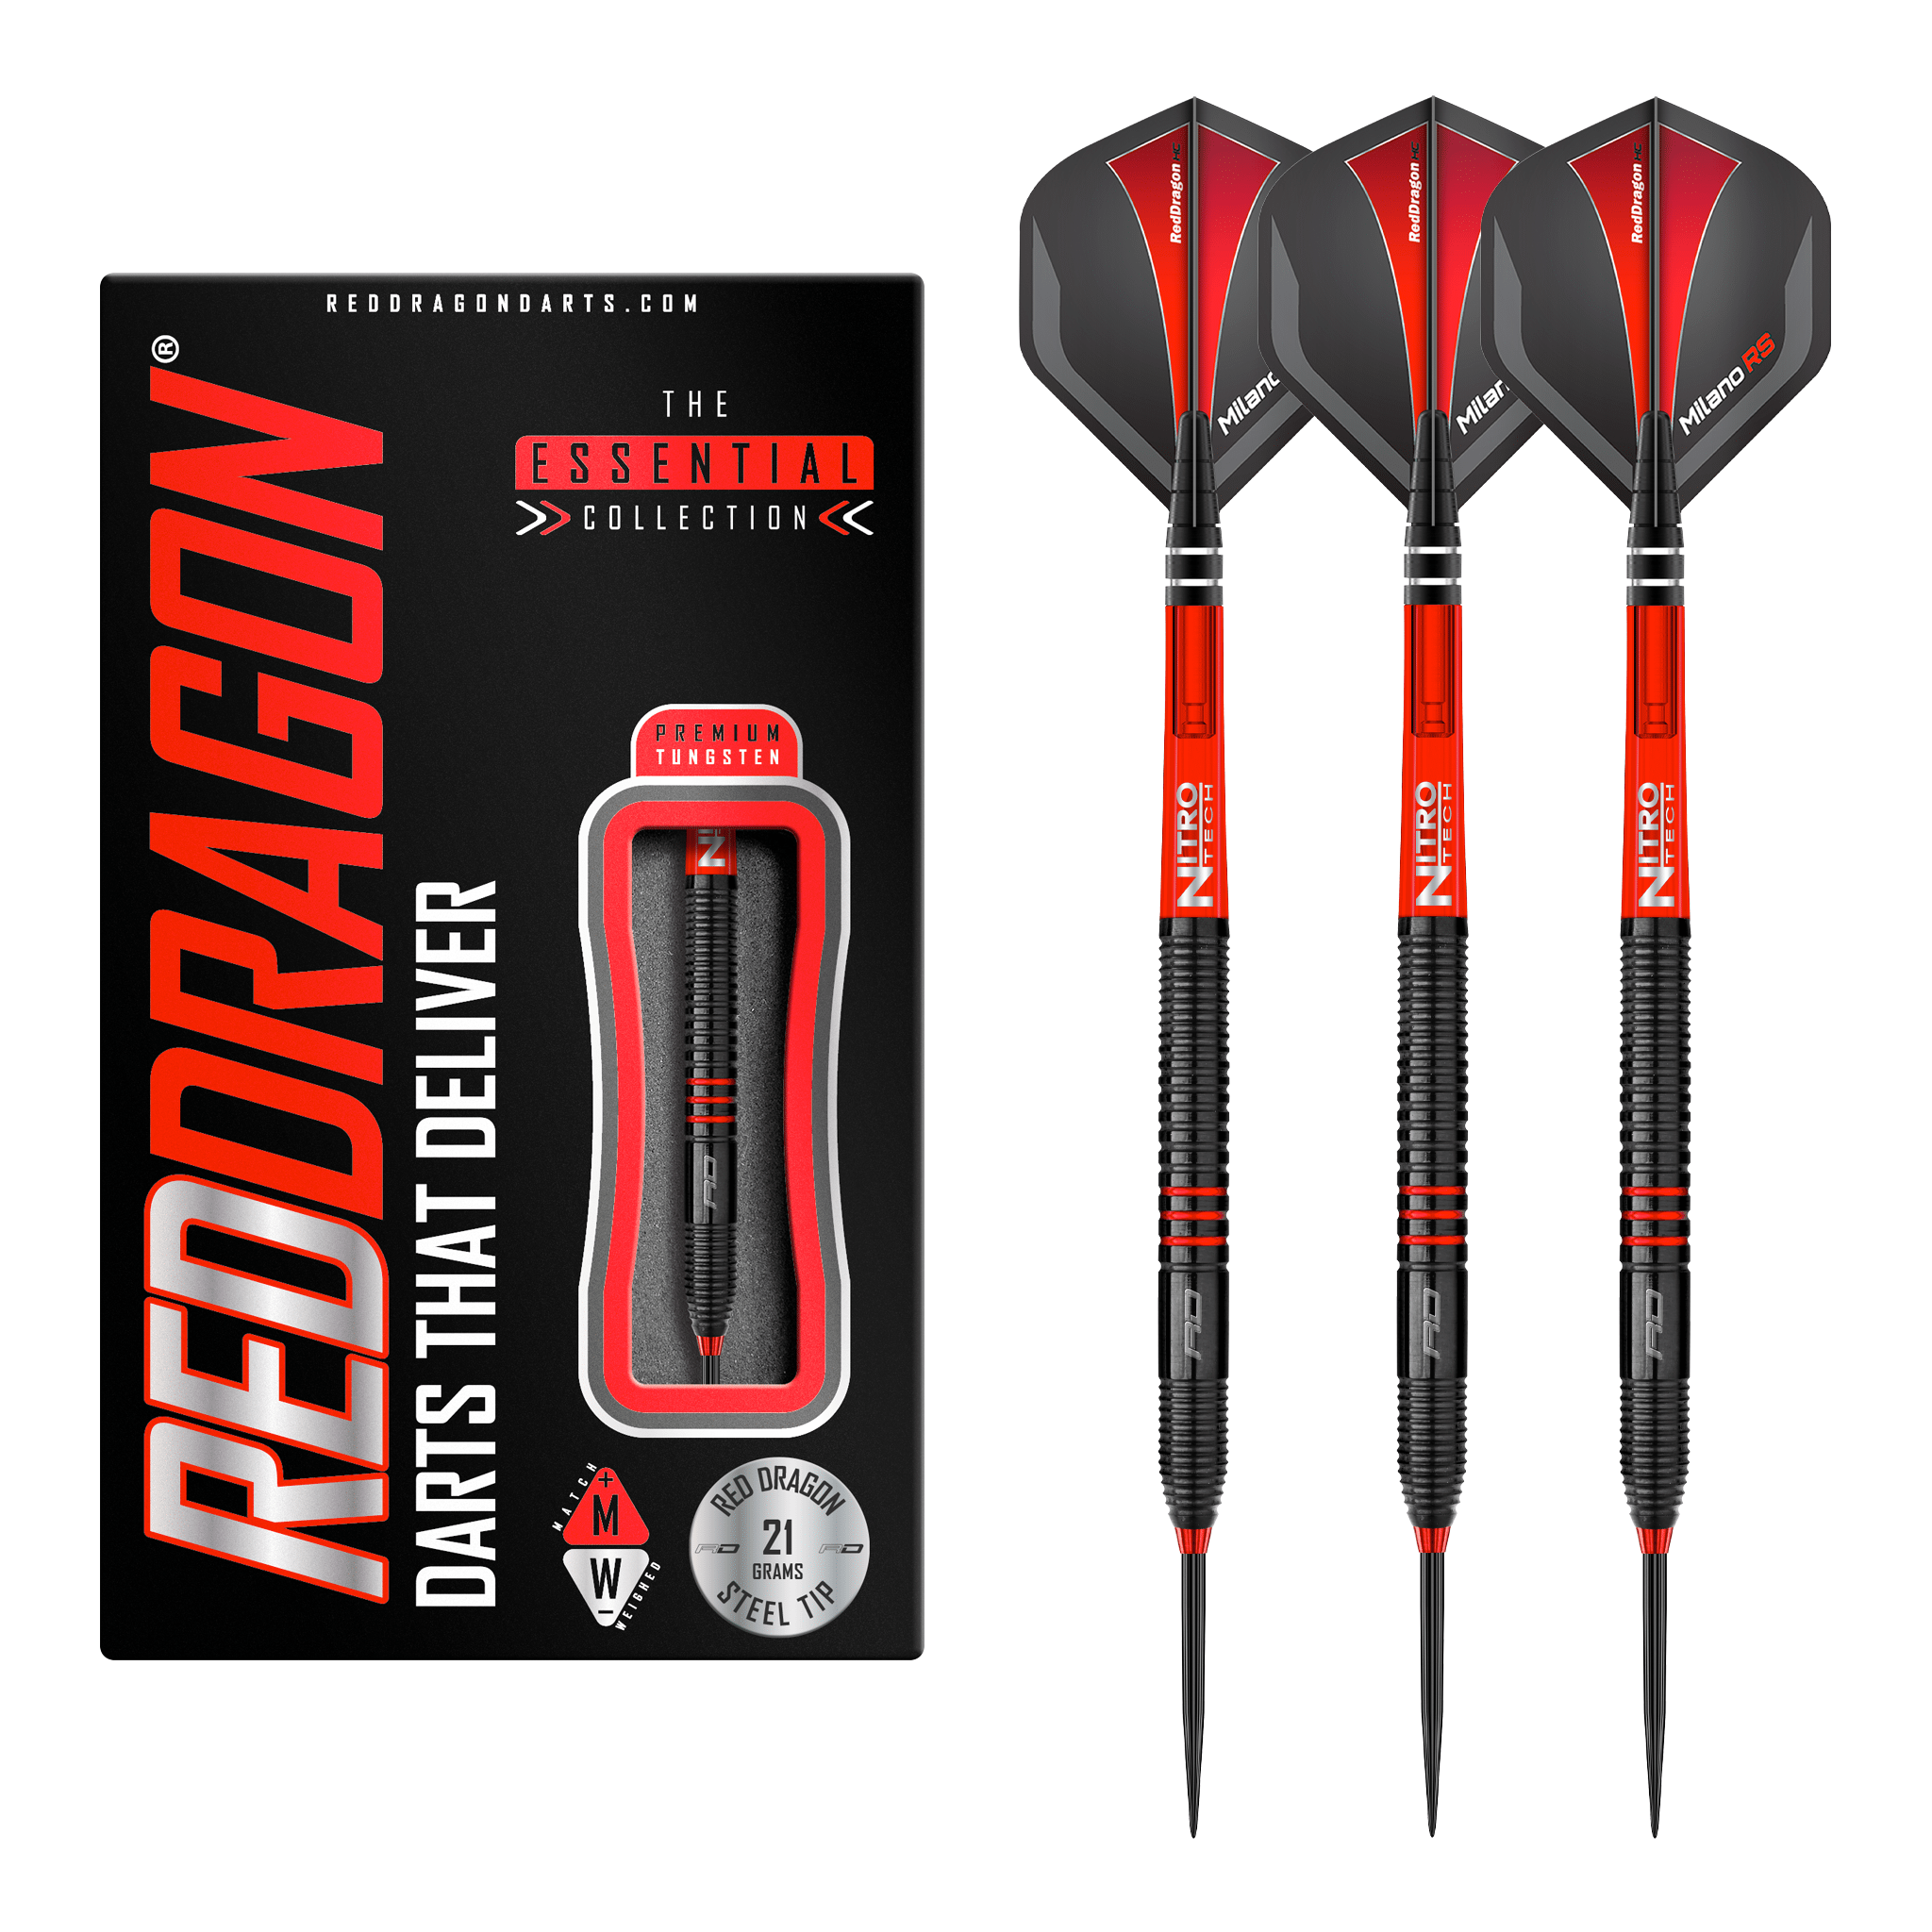 Red Dragon Milano RS Steel Tip Darts - 90% Tungsten - 21 Grams Darts